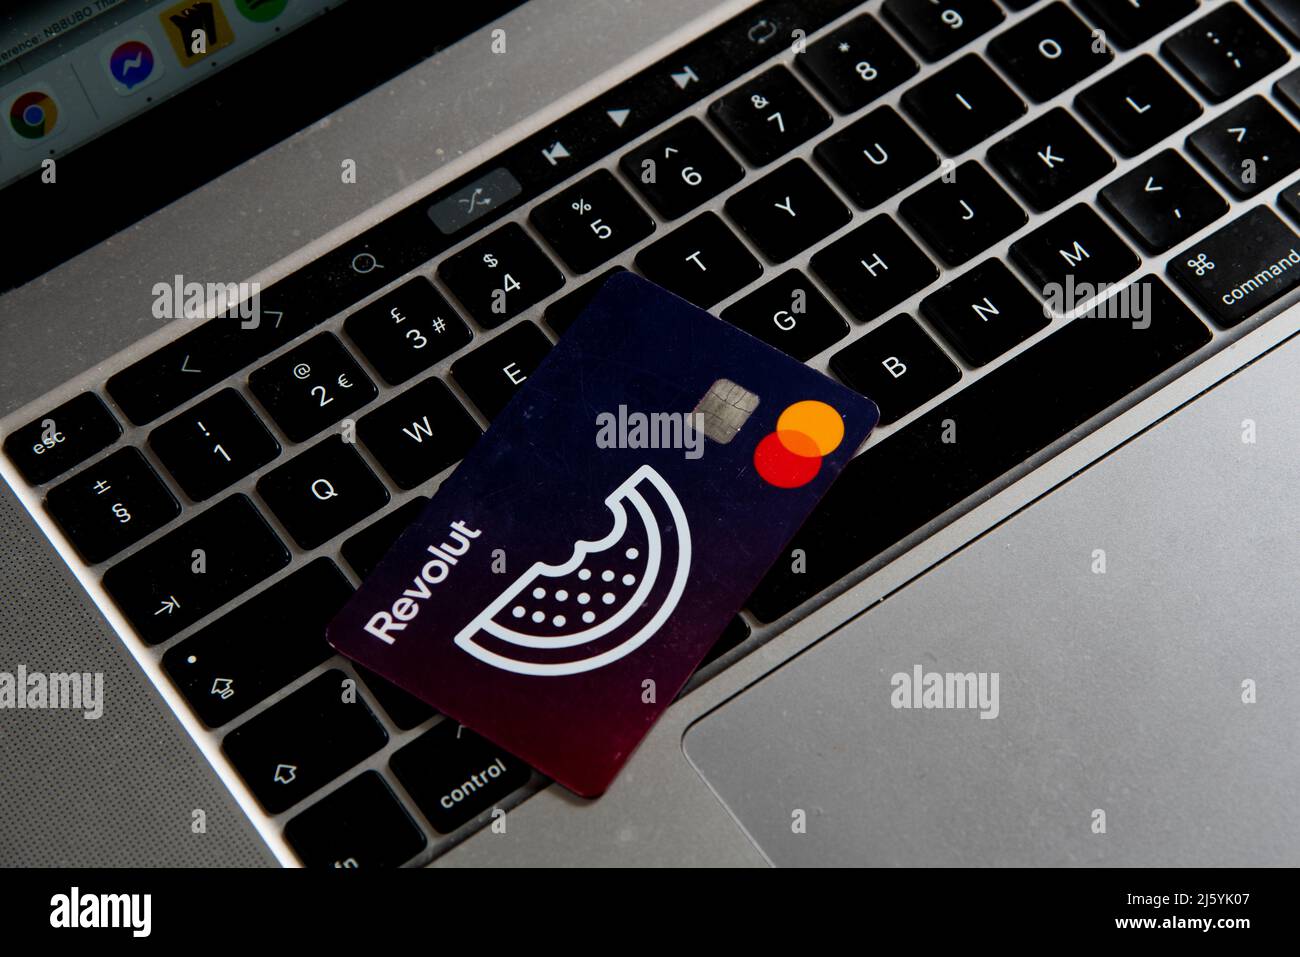 Revolut Credit visa card on computer Keyboard. Digital money, internet banking Stock Photo